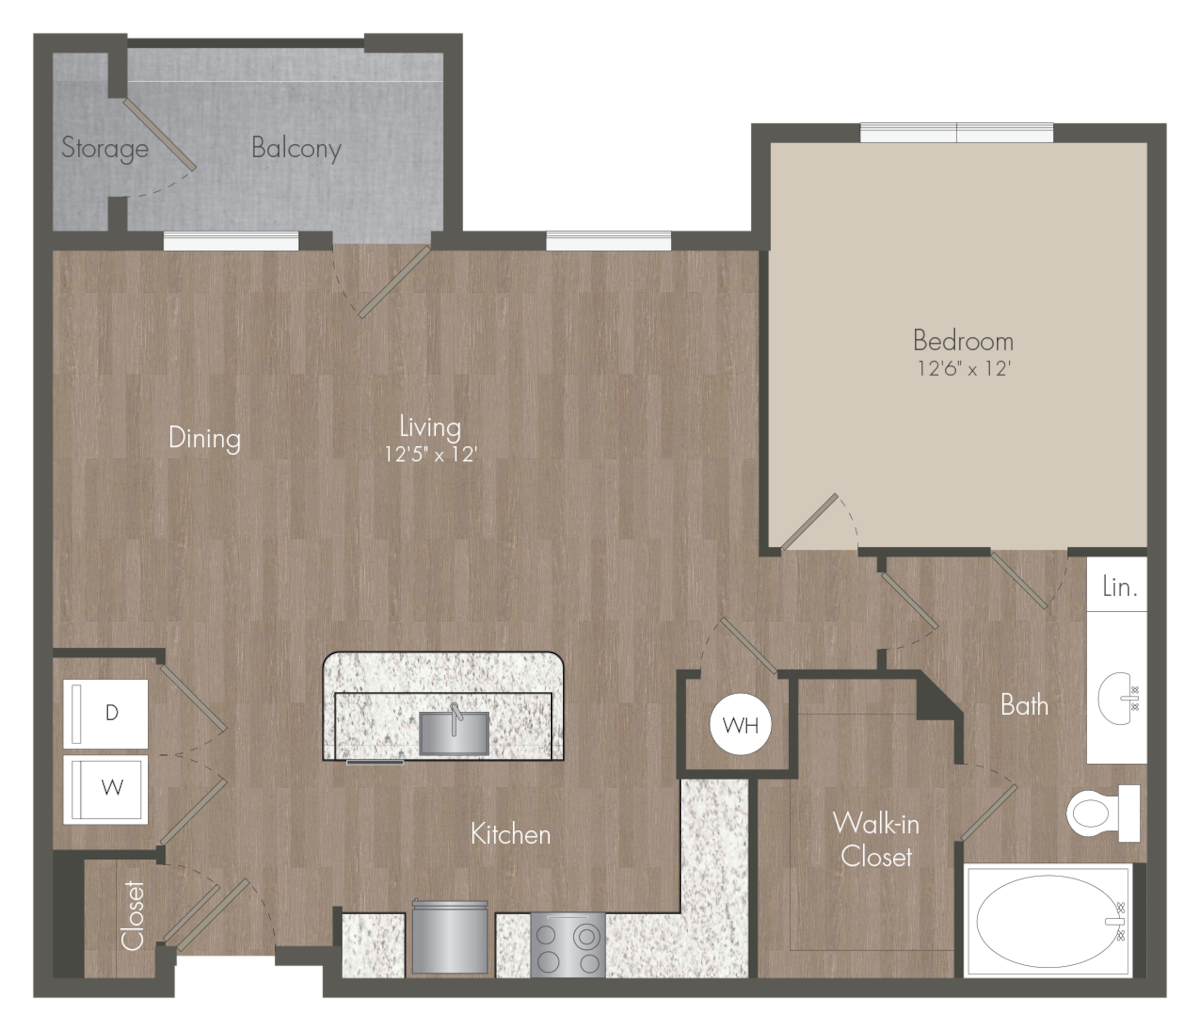 Floorplan diagram for A5 - 1x1, showing 1 bedroom